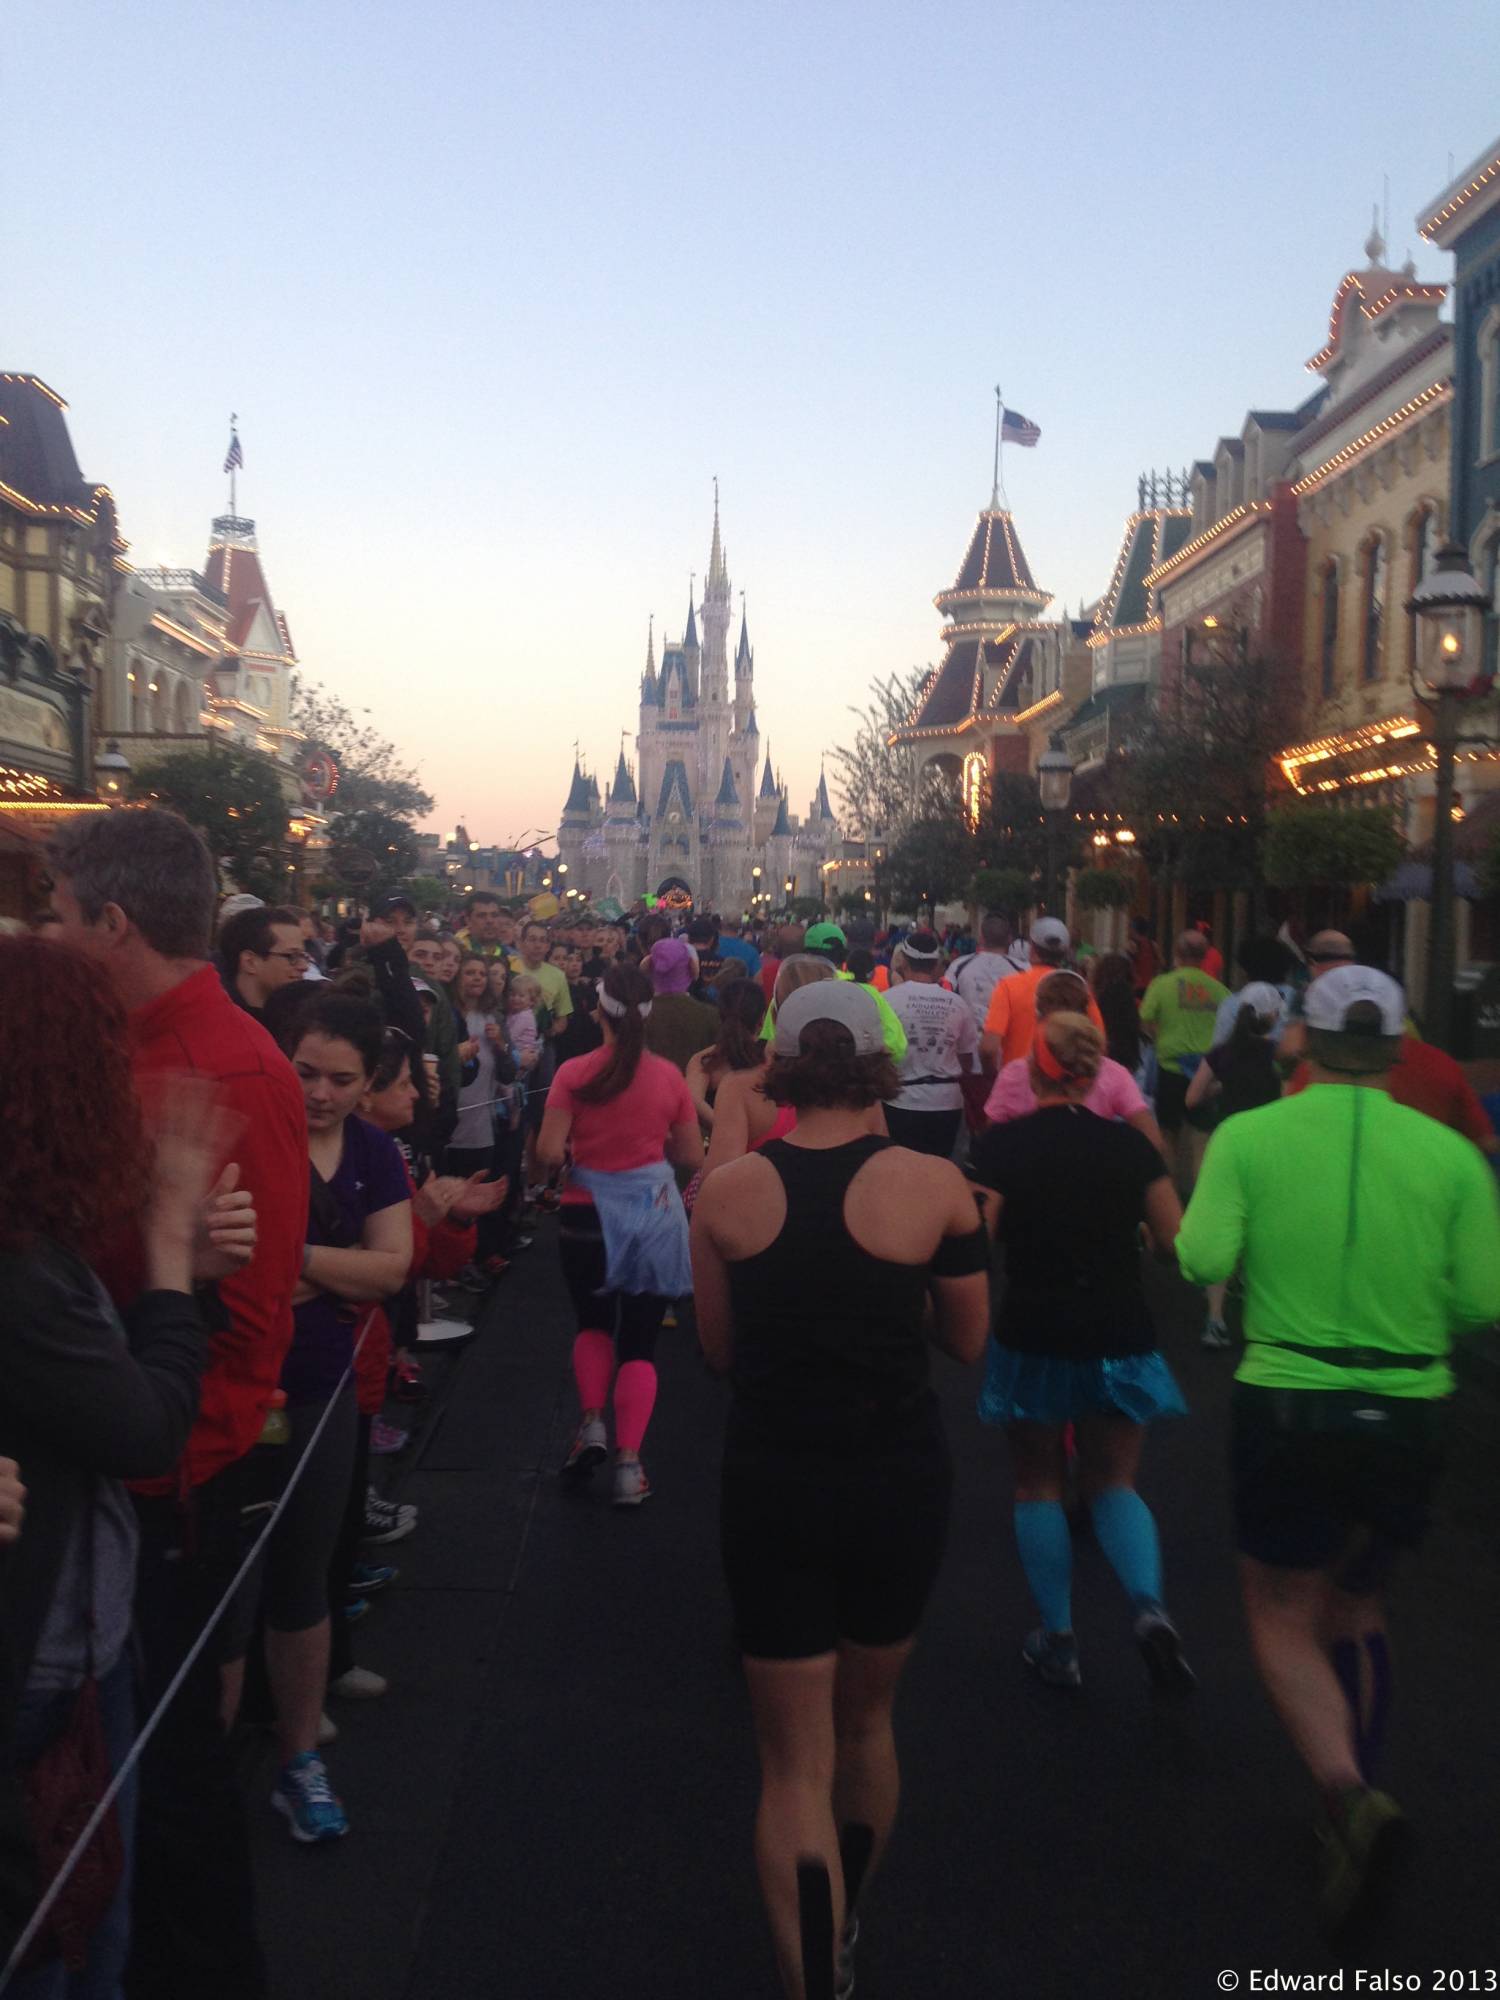 The 2014 Disney World Marathon